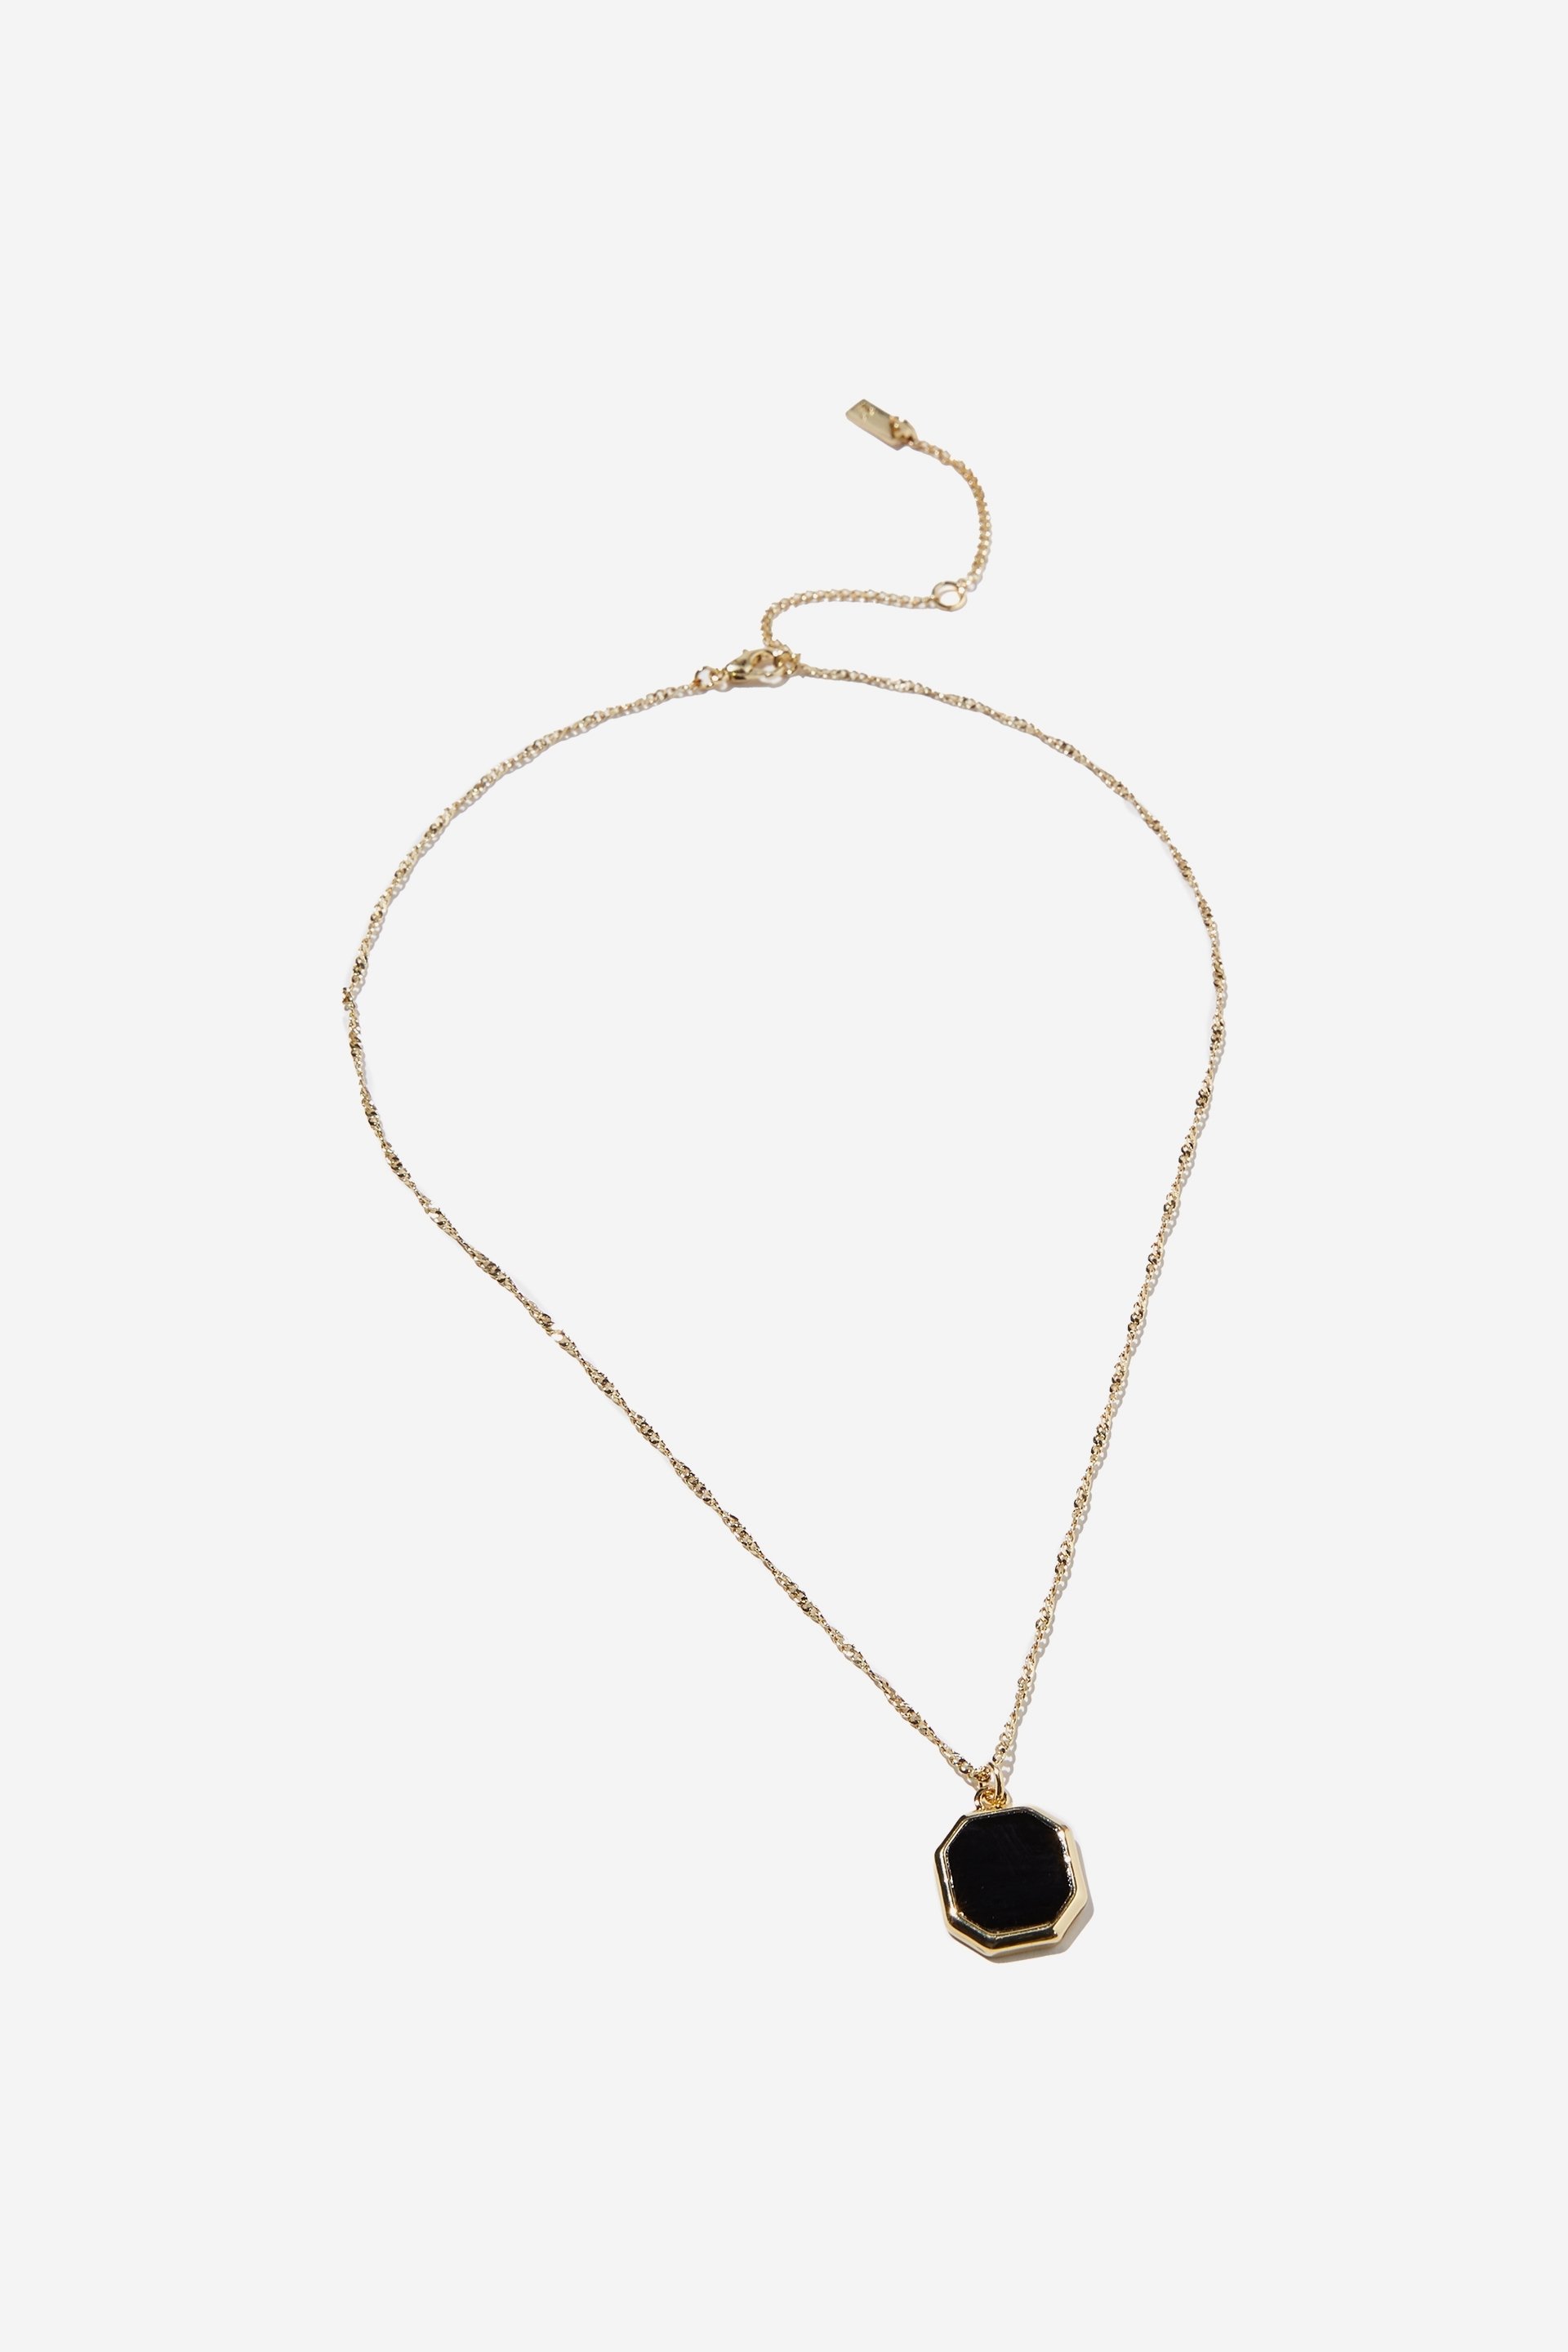 Rubi - Premium Pendant Necklace - Gold plated onyx hexagon